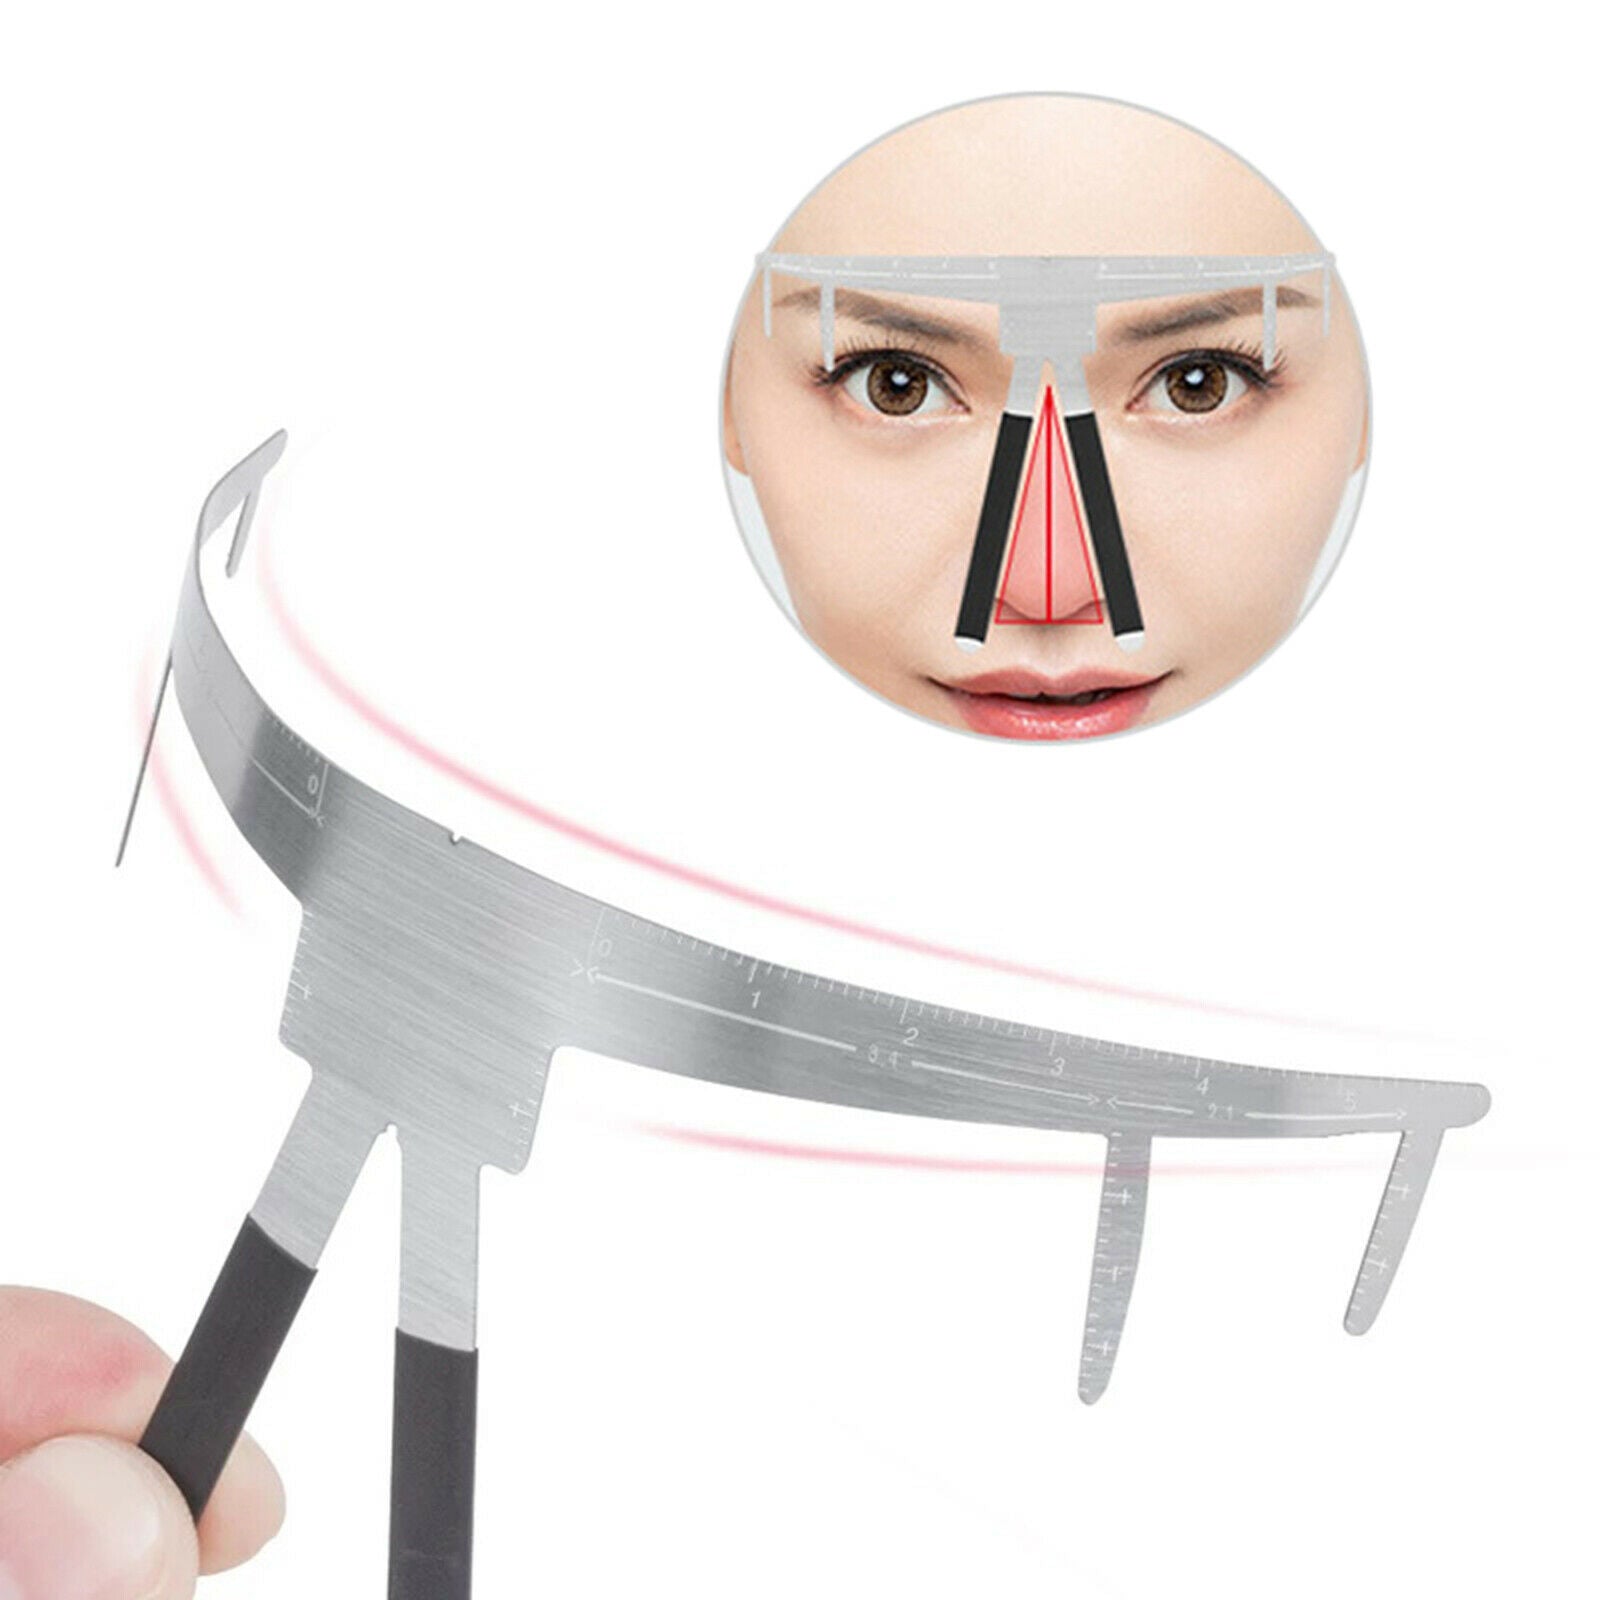 Tattoo Eyebrow Ruler Makeup Accessories Supplies Tool for Eyebrow Measuring